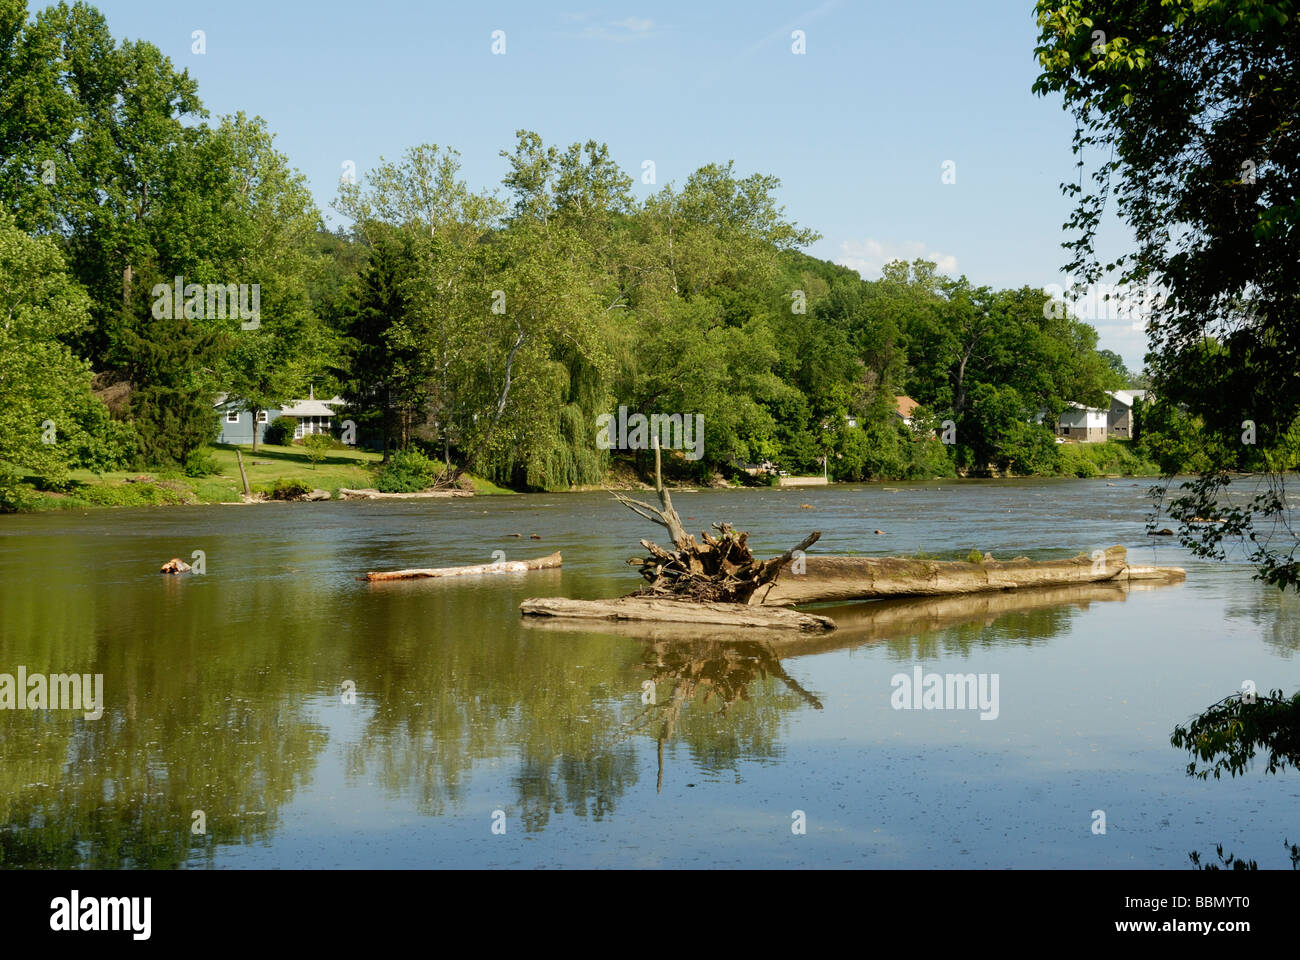 Log in licking river in Zanesville Stock Photo